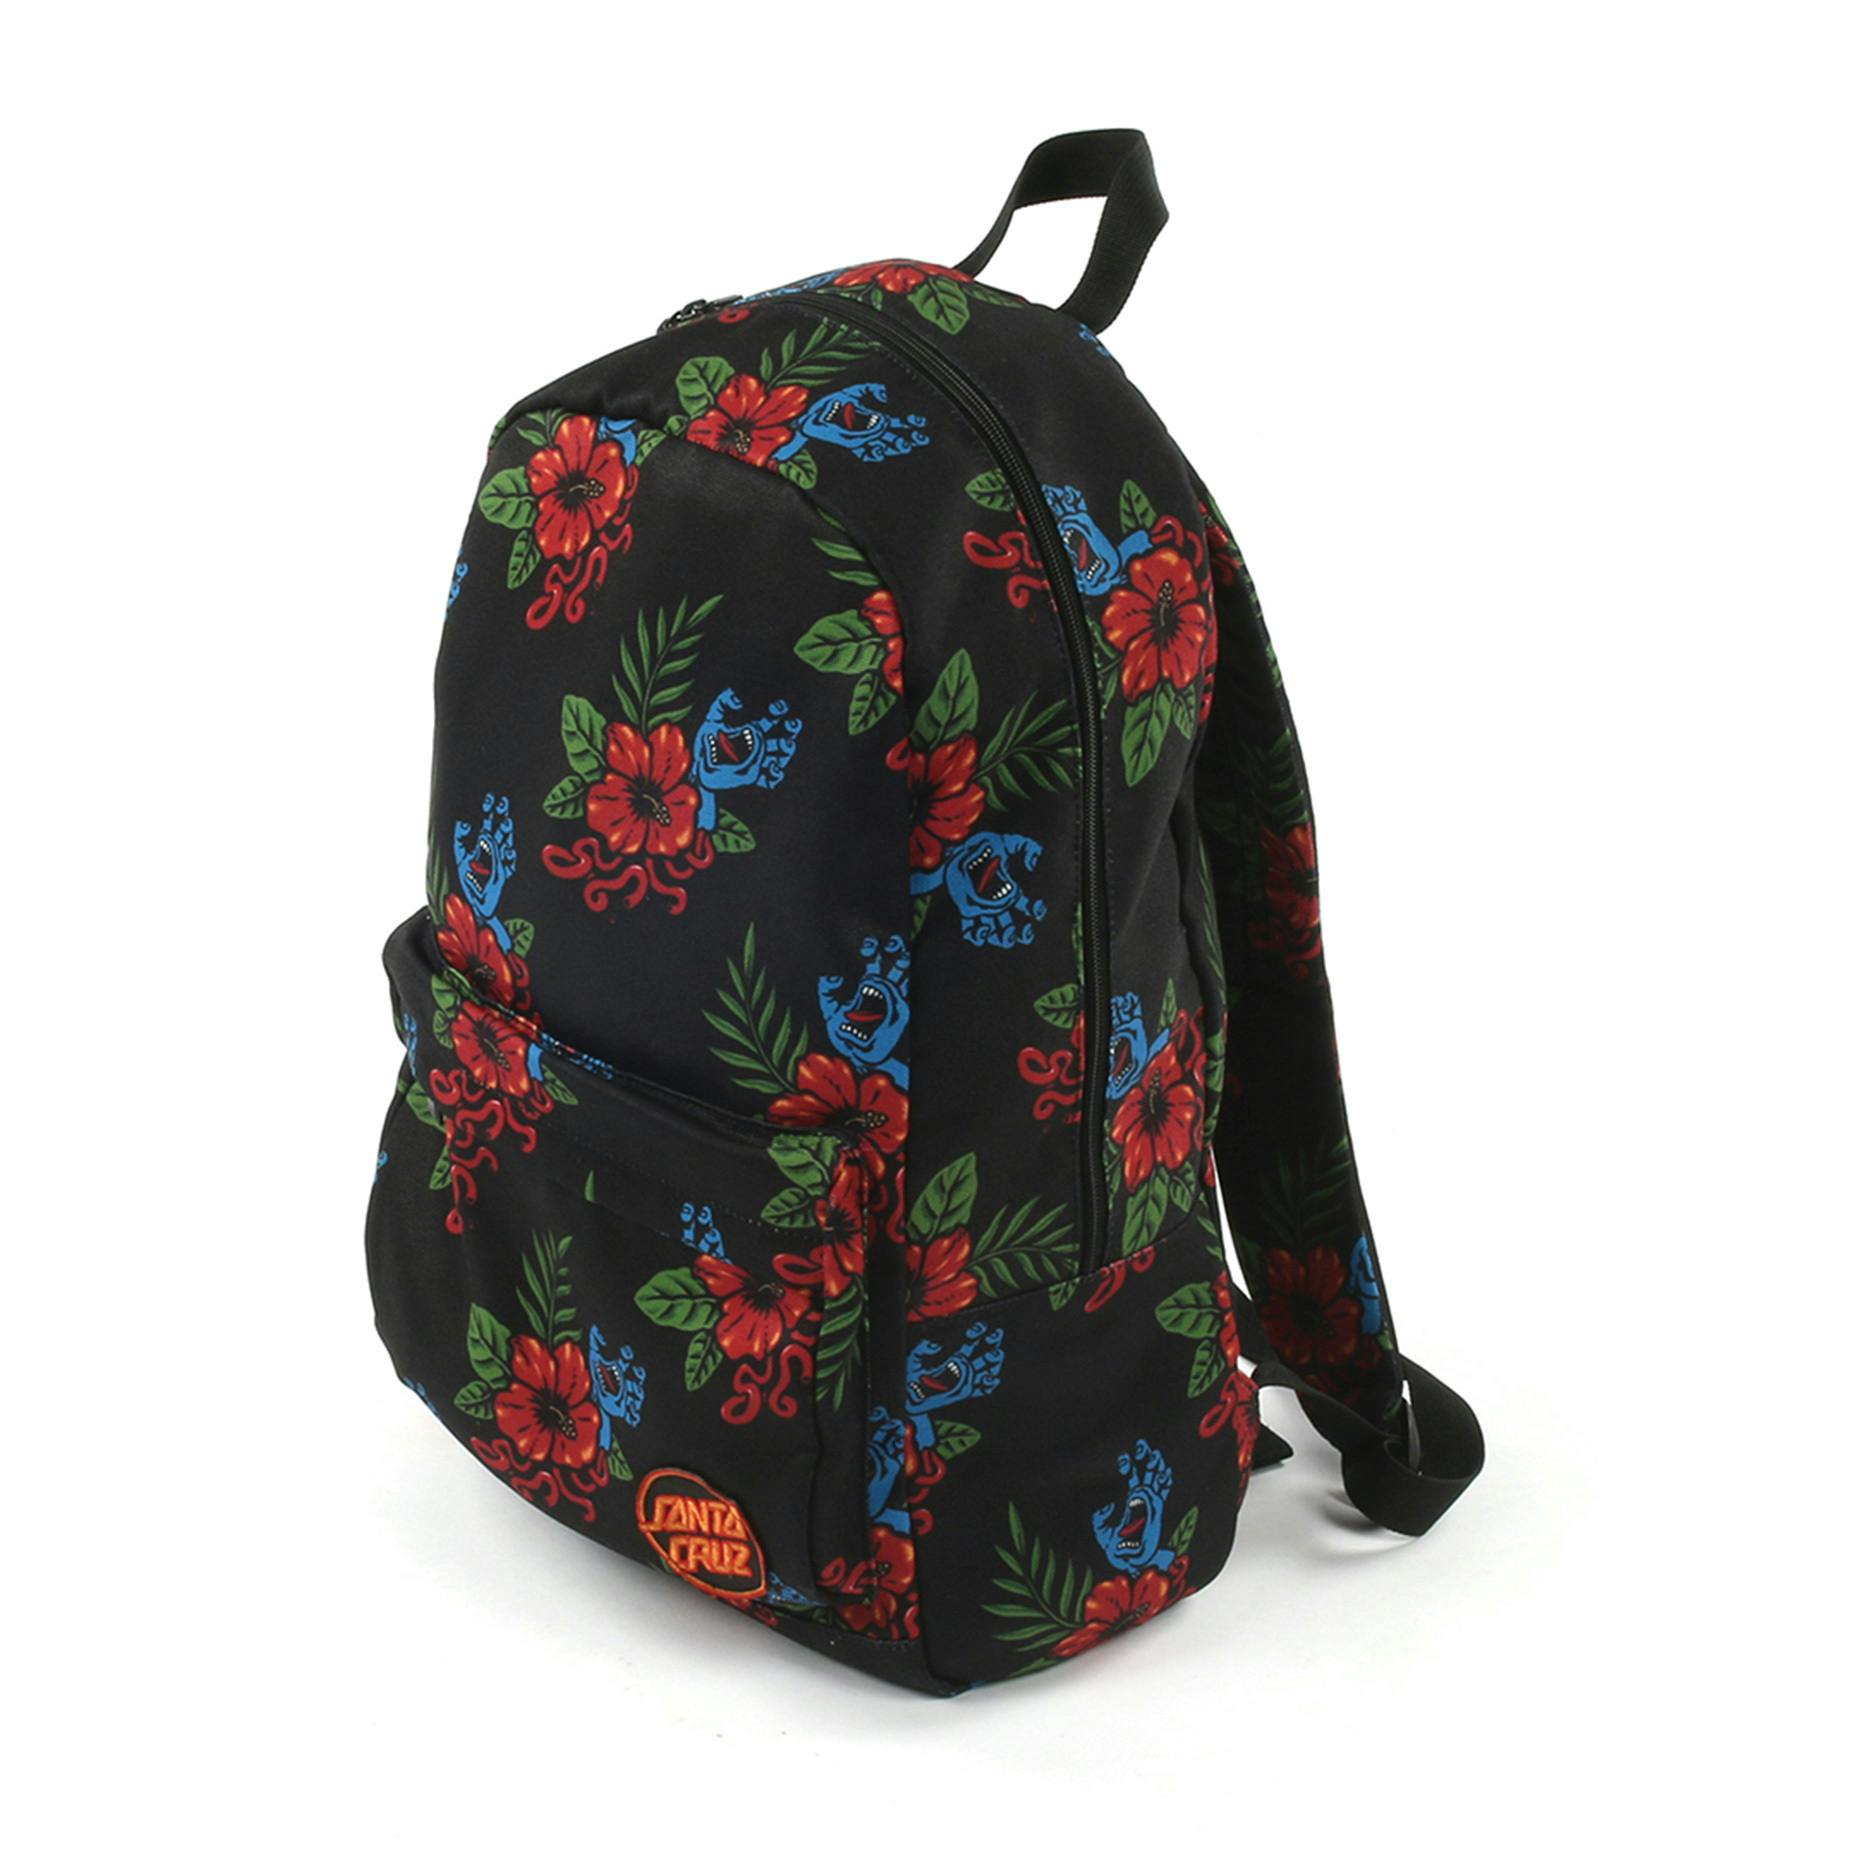 Santa Cruz Vacation Backpack - Black | BOARDWORLD Store